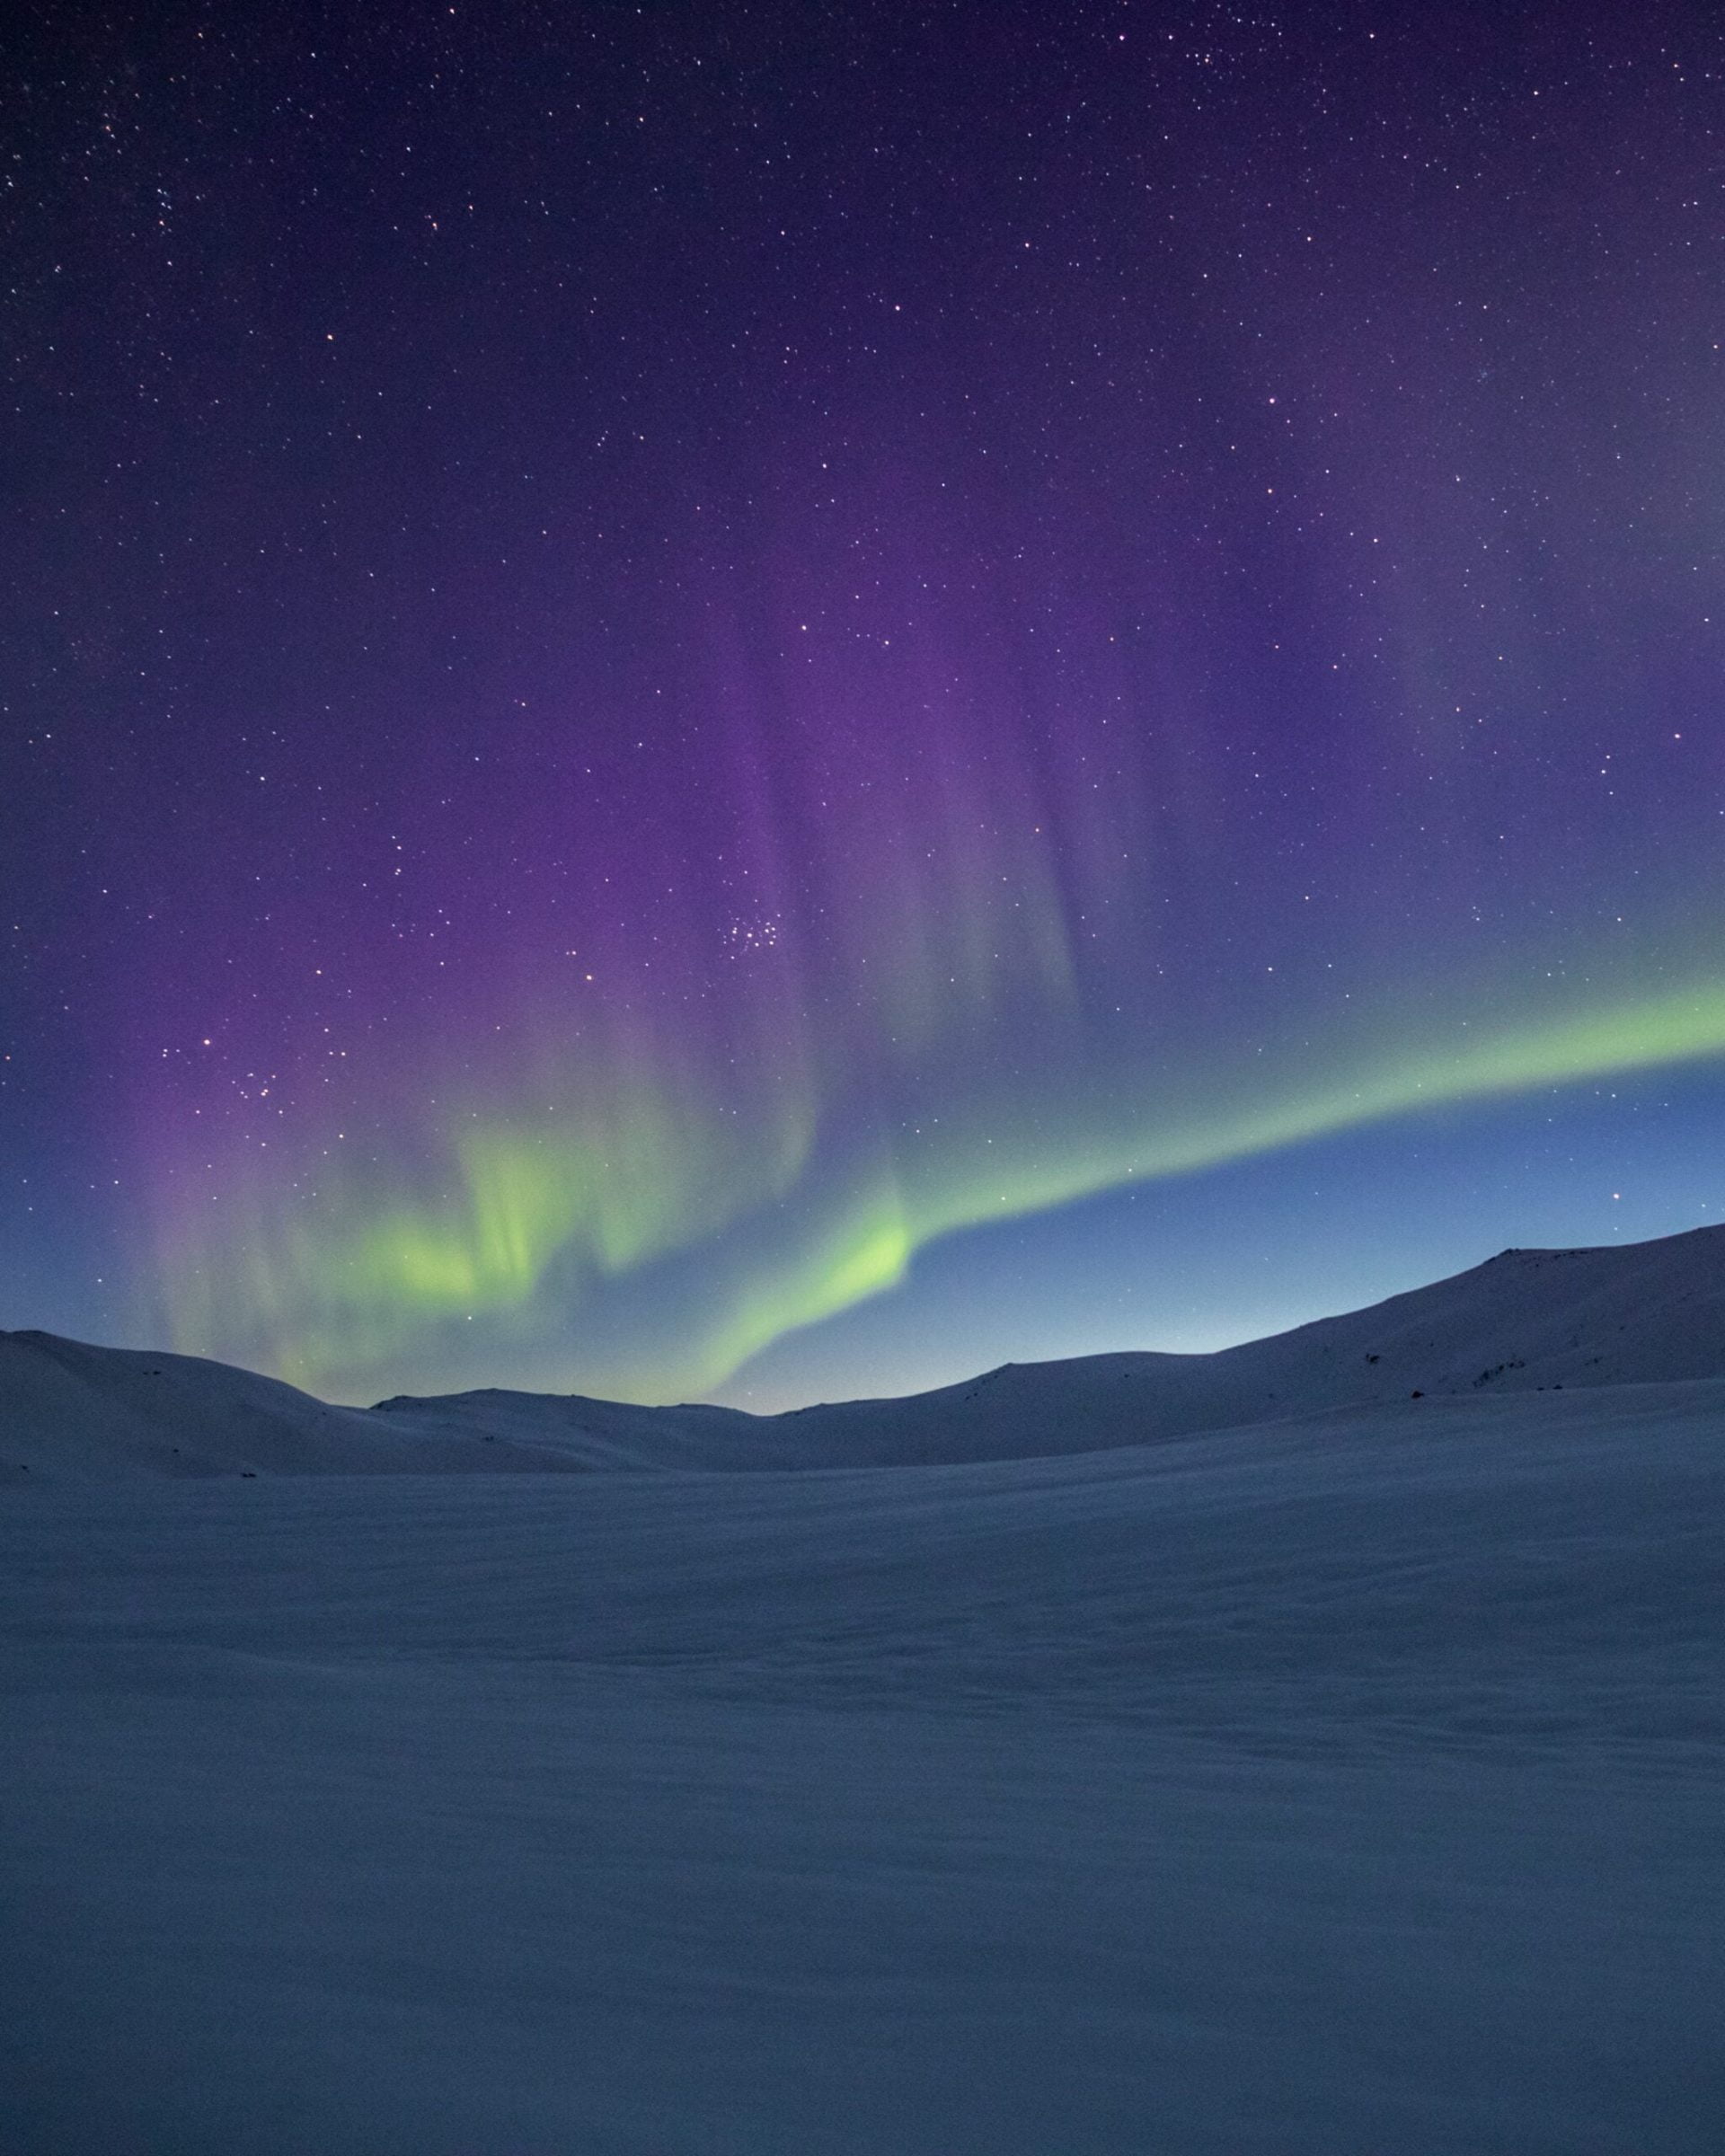 Aurora over a winter landscape